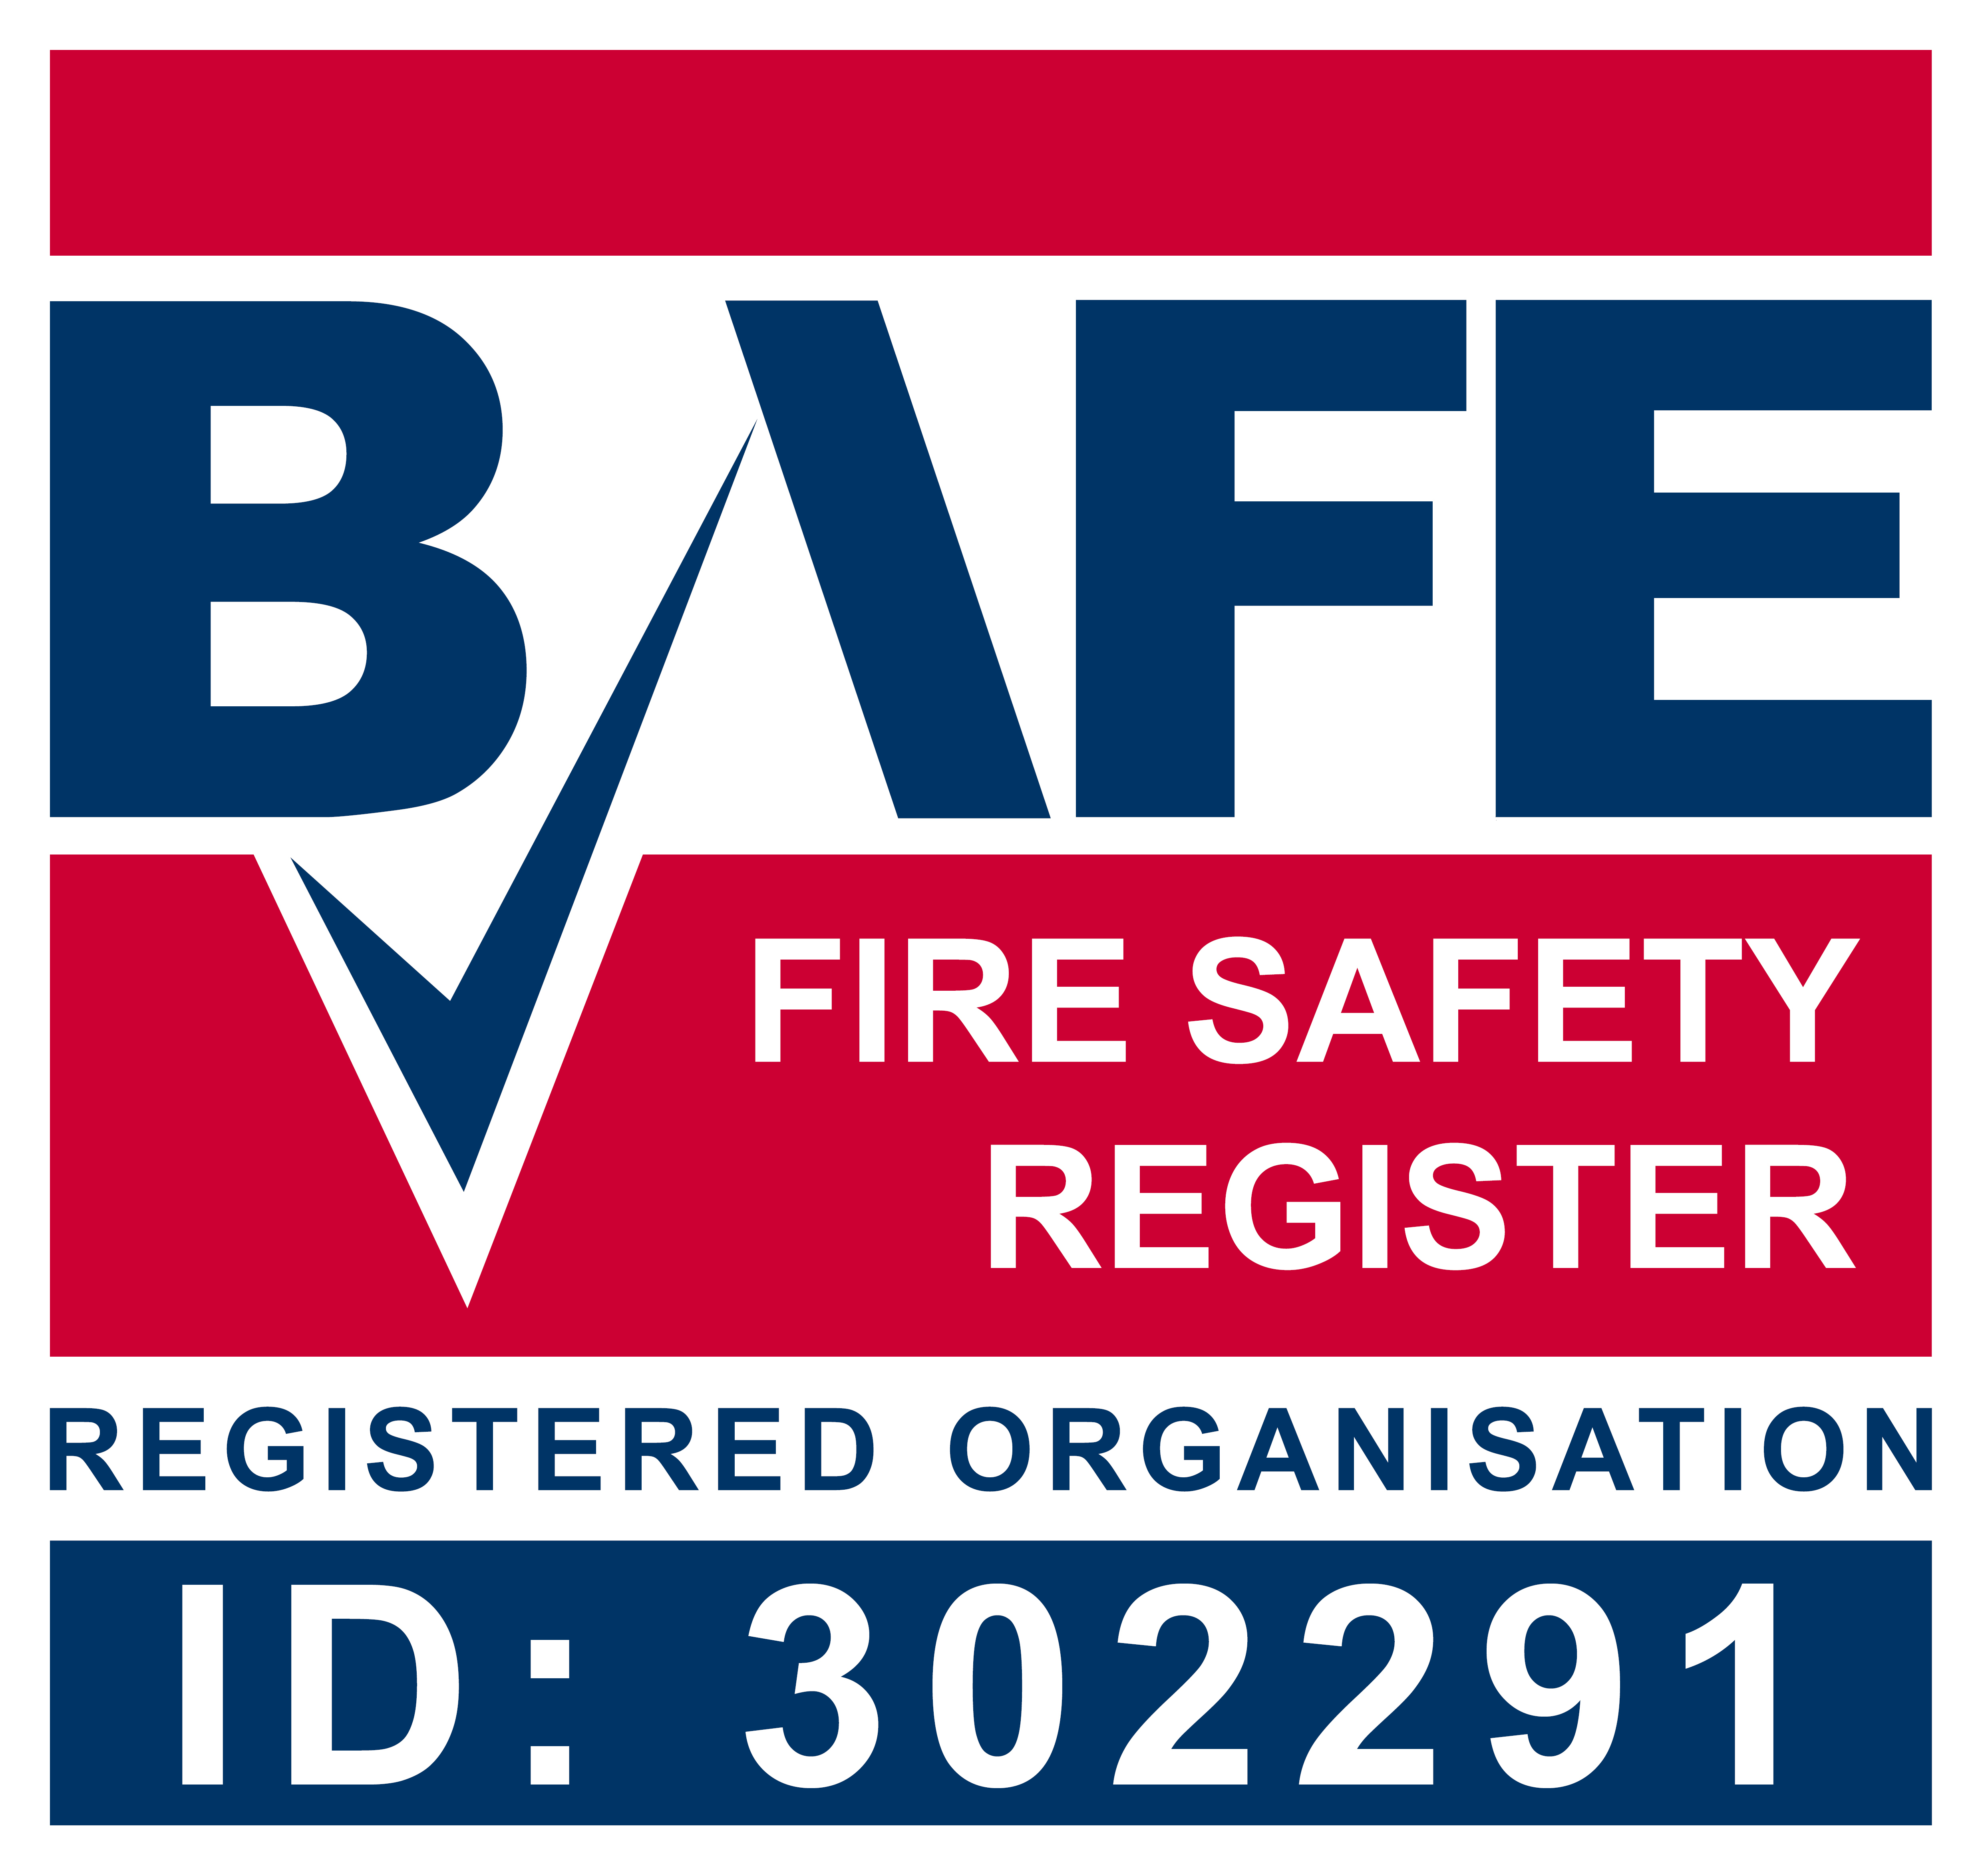 Bafe Registered Organisation Logo, ID:302291 